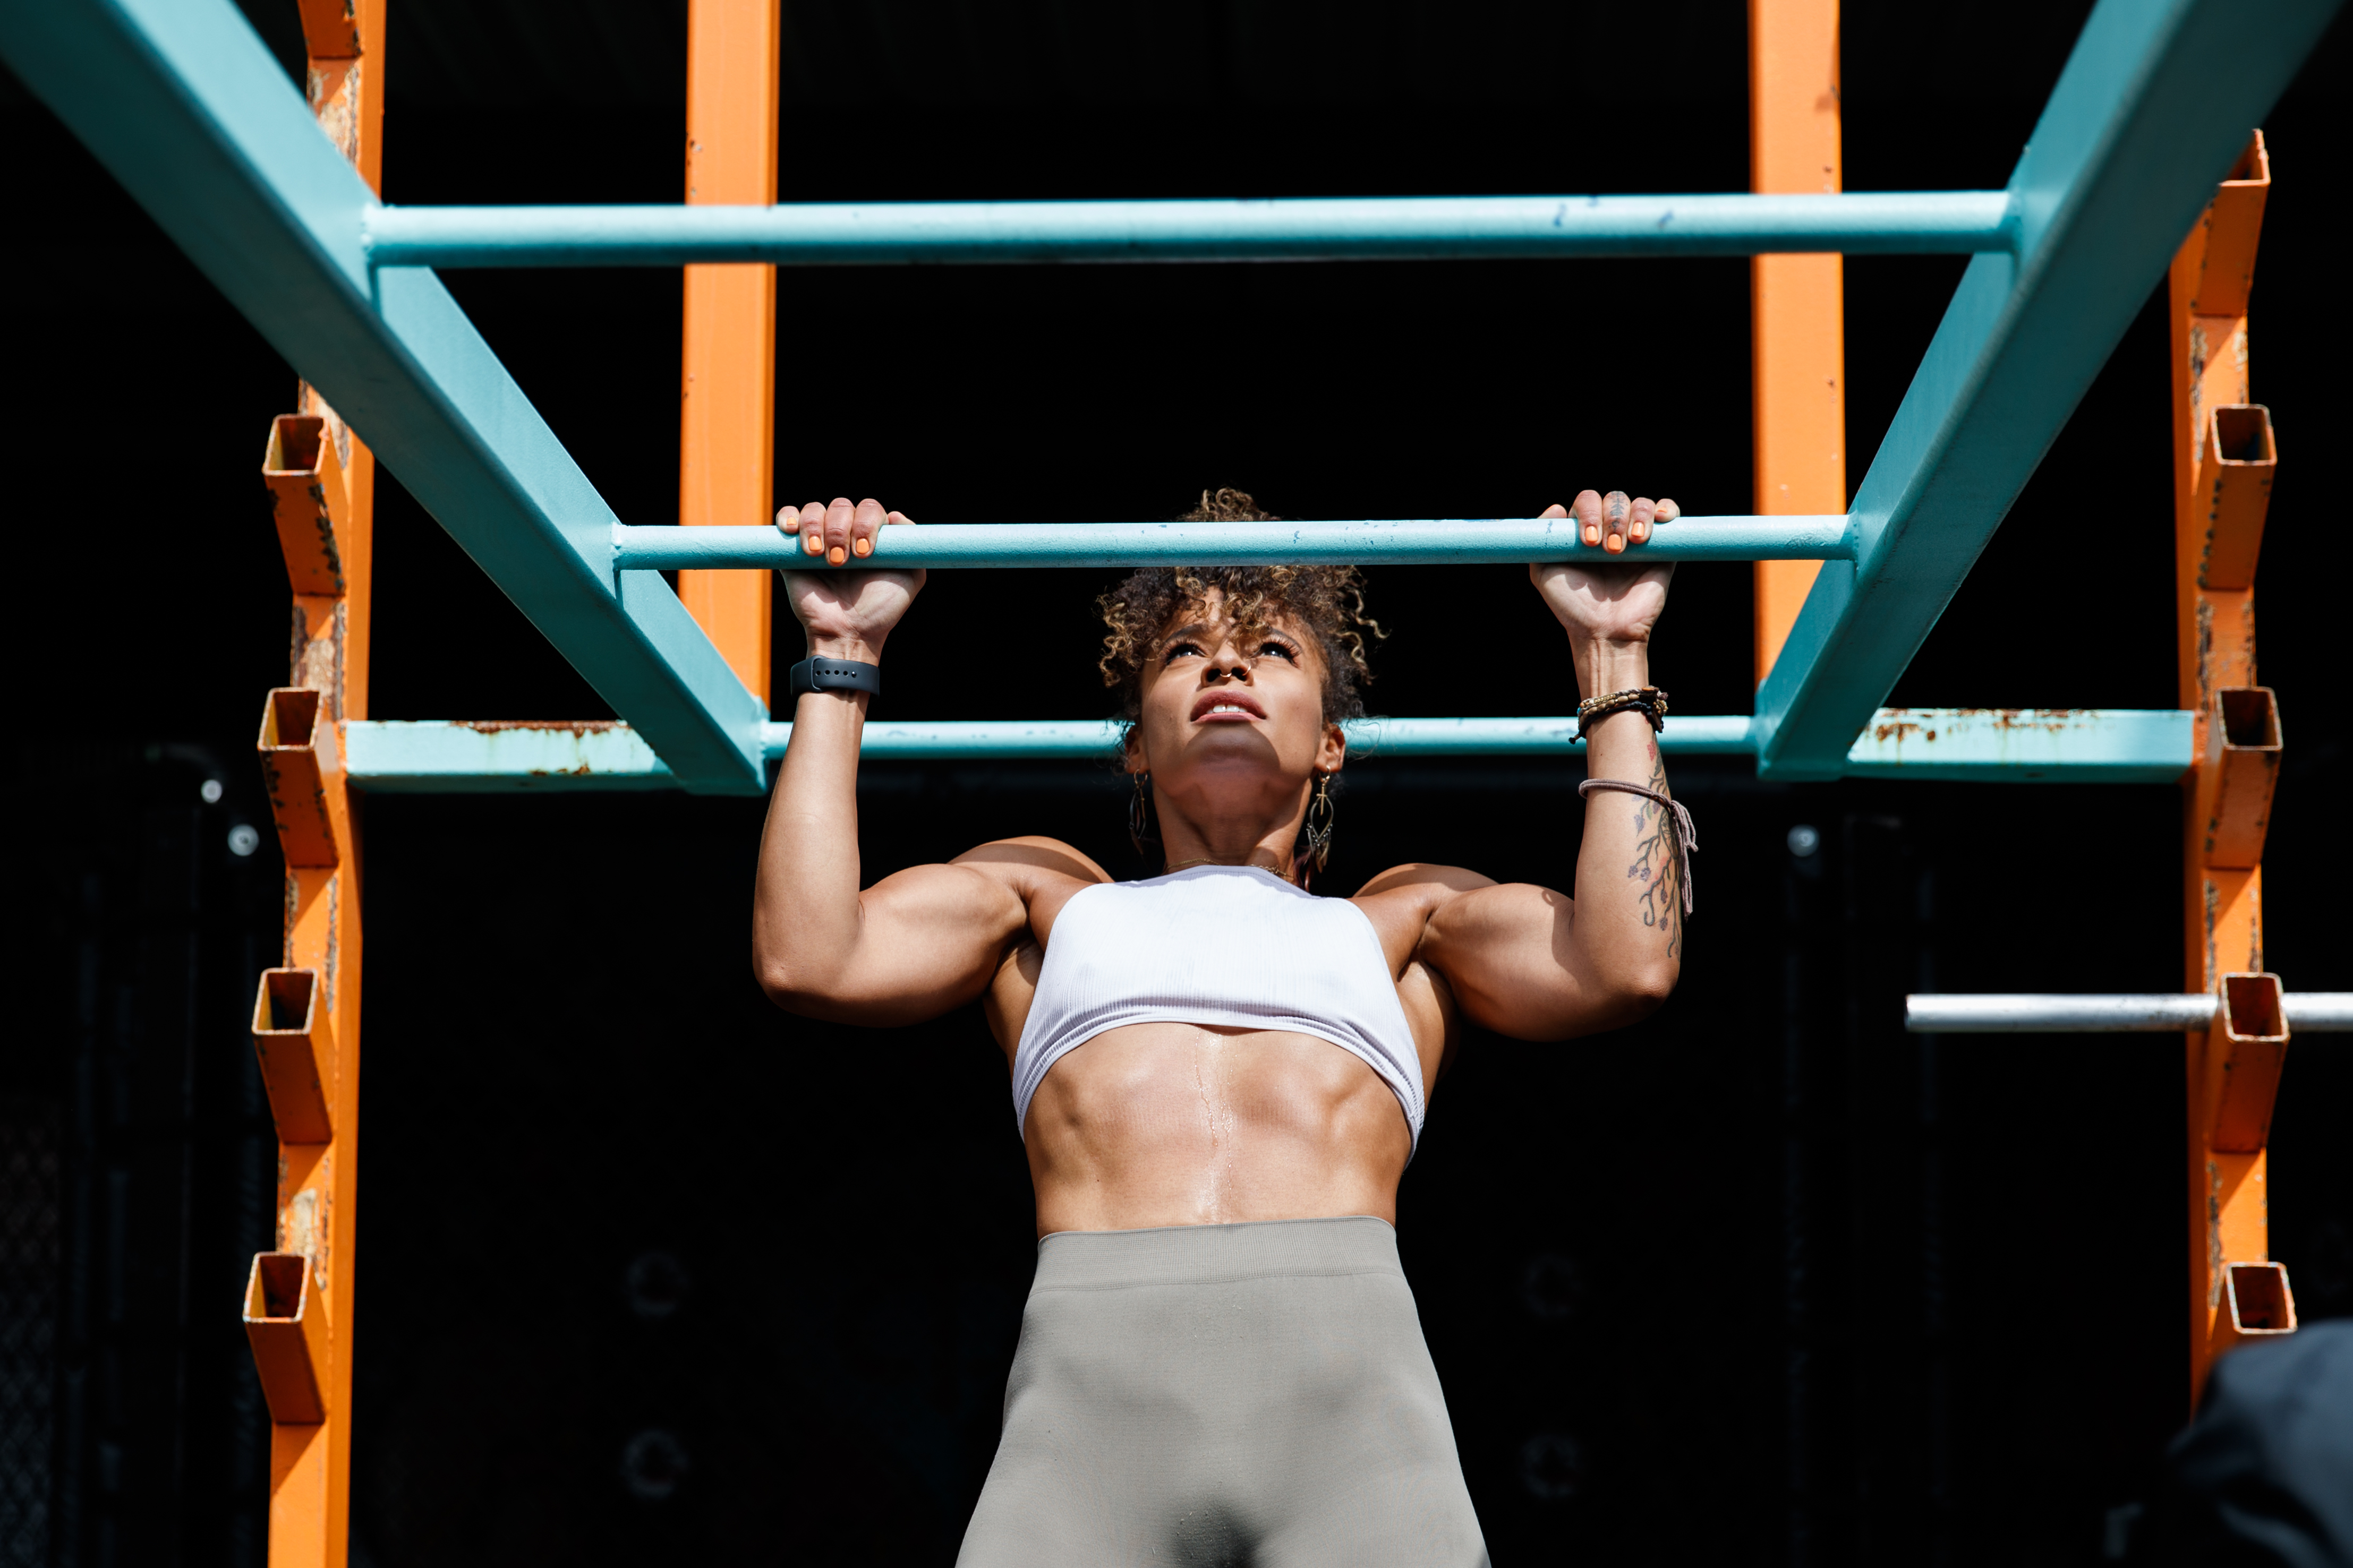 Leg Lifts & Holding a Pull-Up Bar : Full Fitness Training 